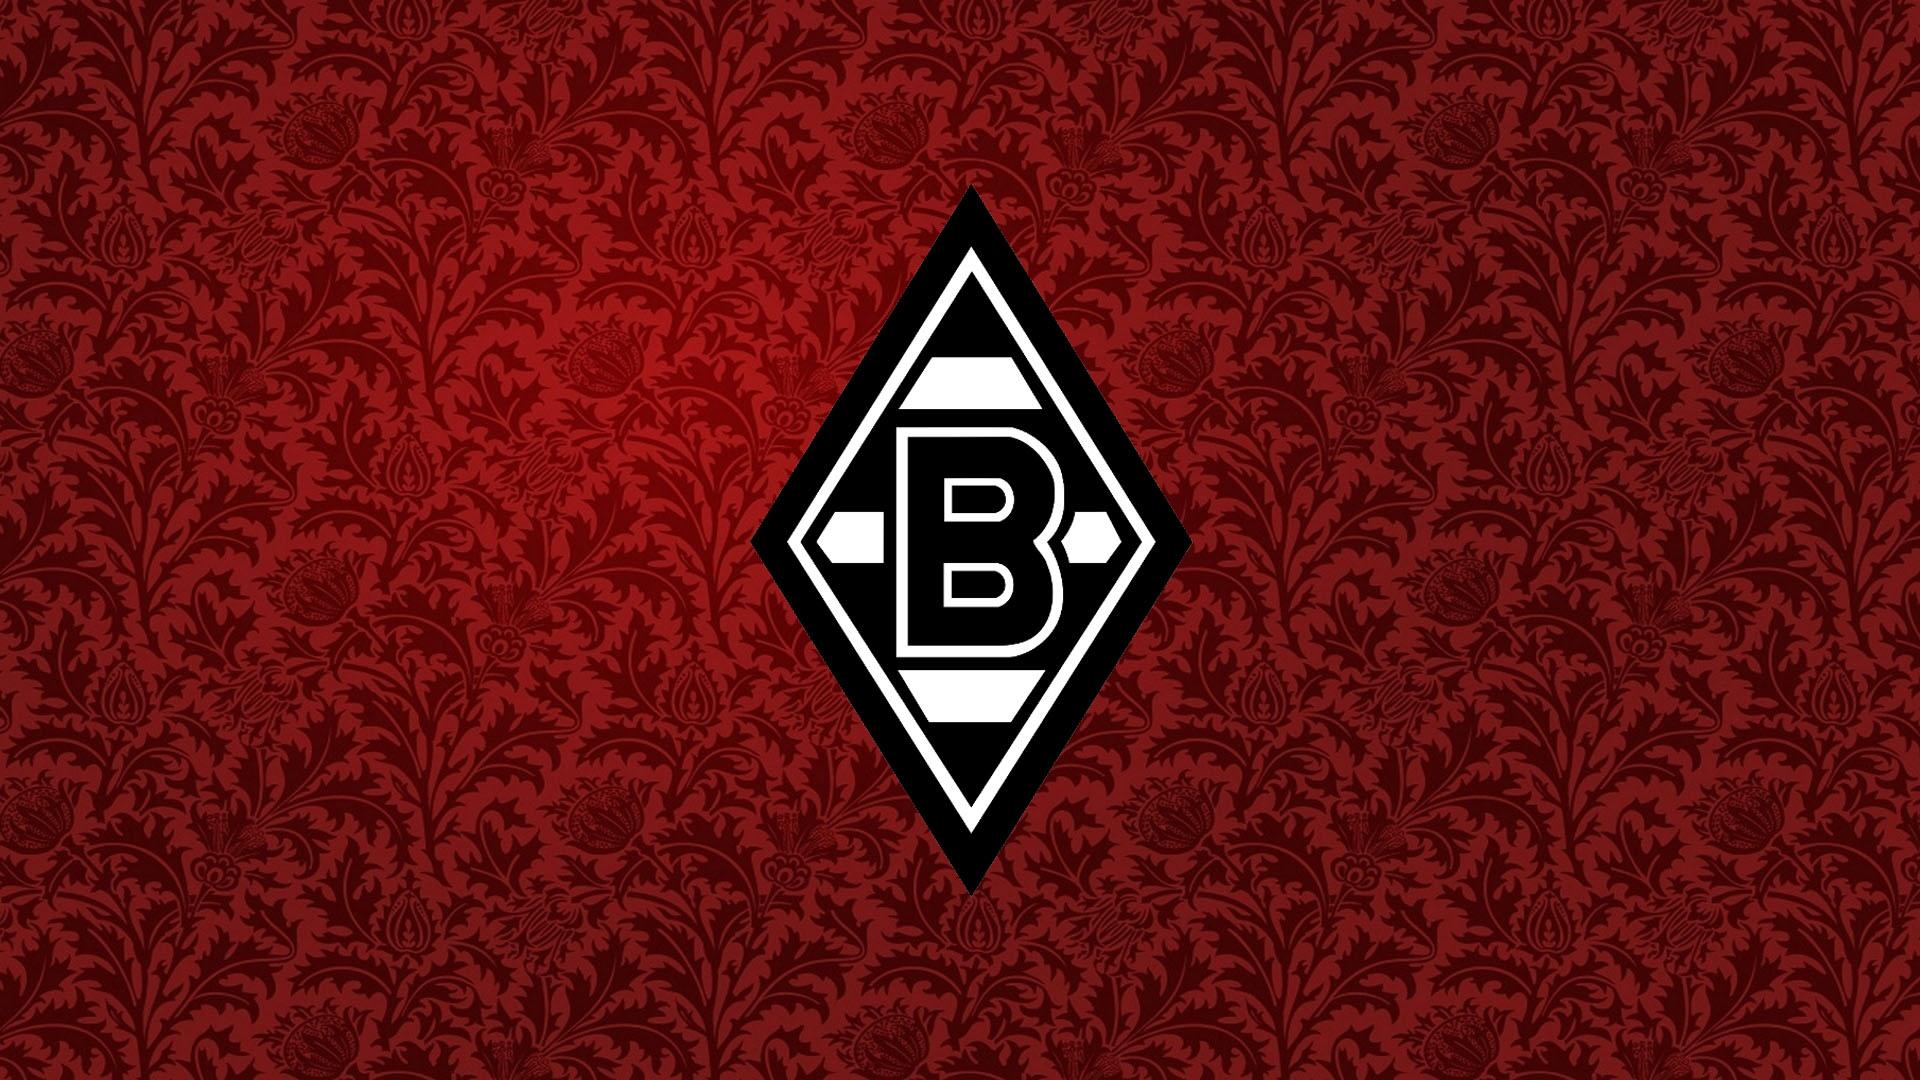 Borussia Mönchengladbach Wallpapers - Wallpaper Cave